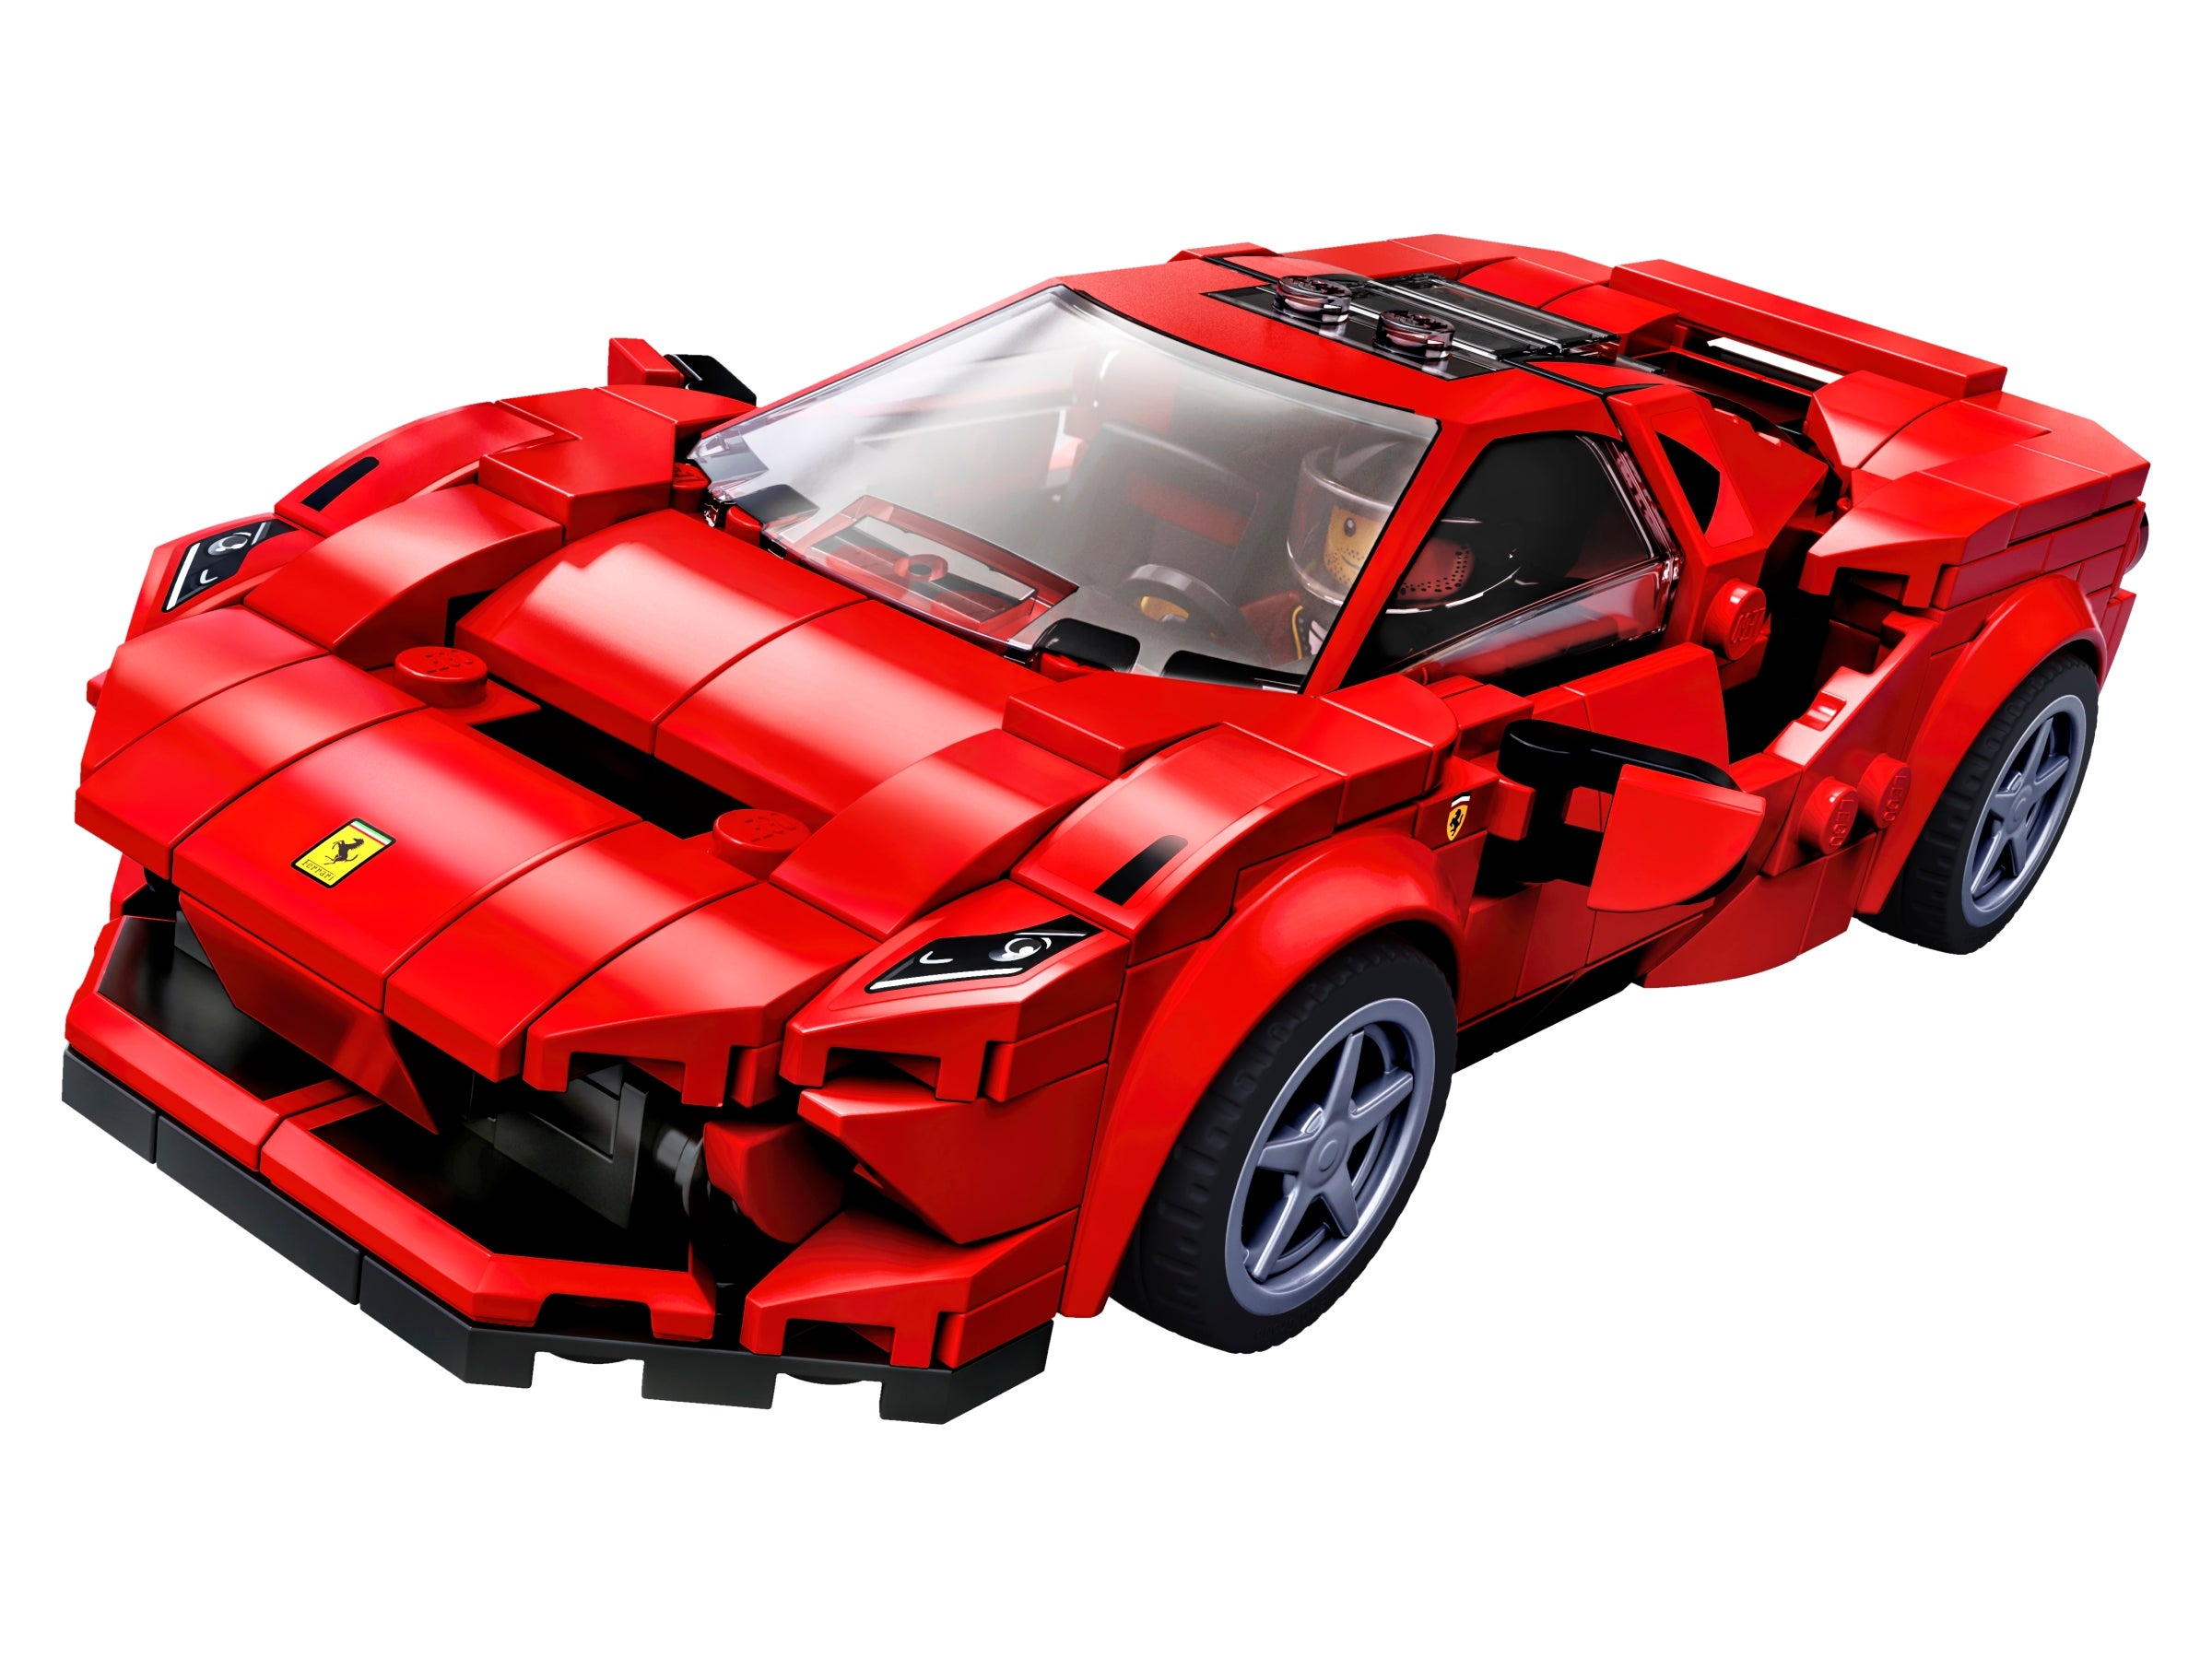 76895 LEGO Ferrari F8 Tributo Speed Champions for sale online